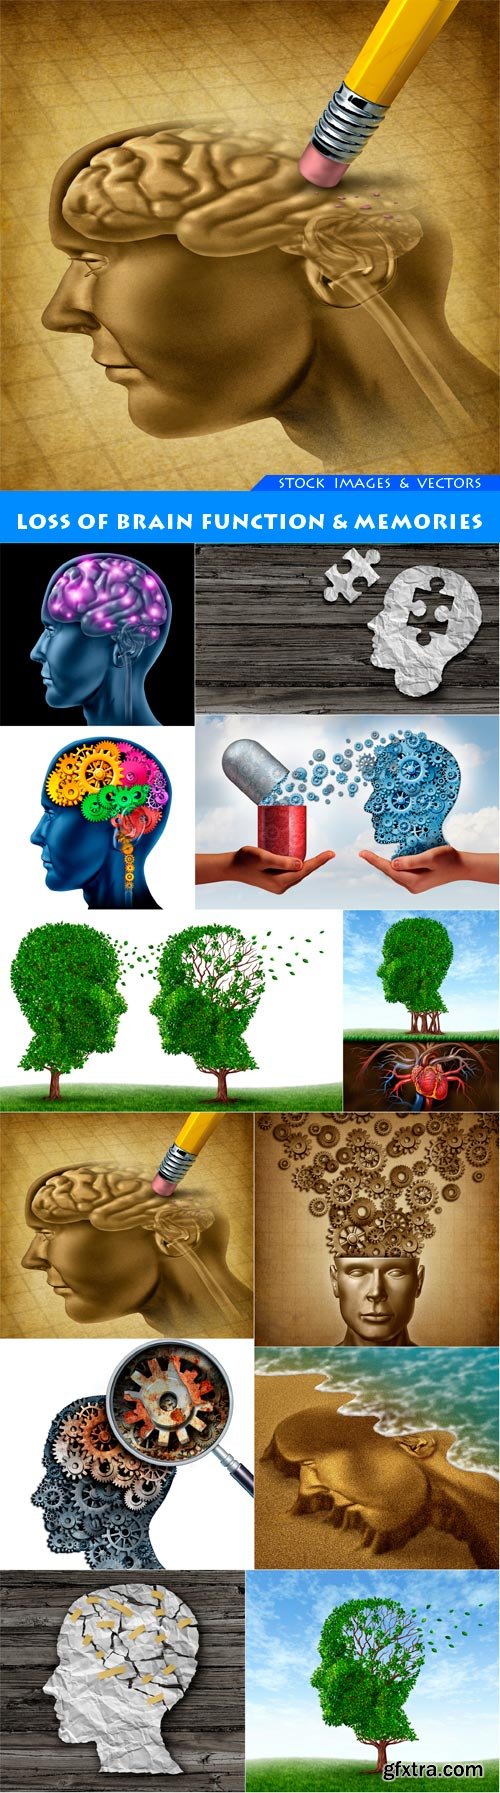 Loss of brain function & memories 12X JPEG